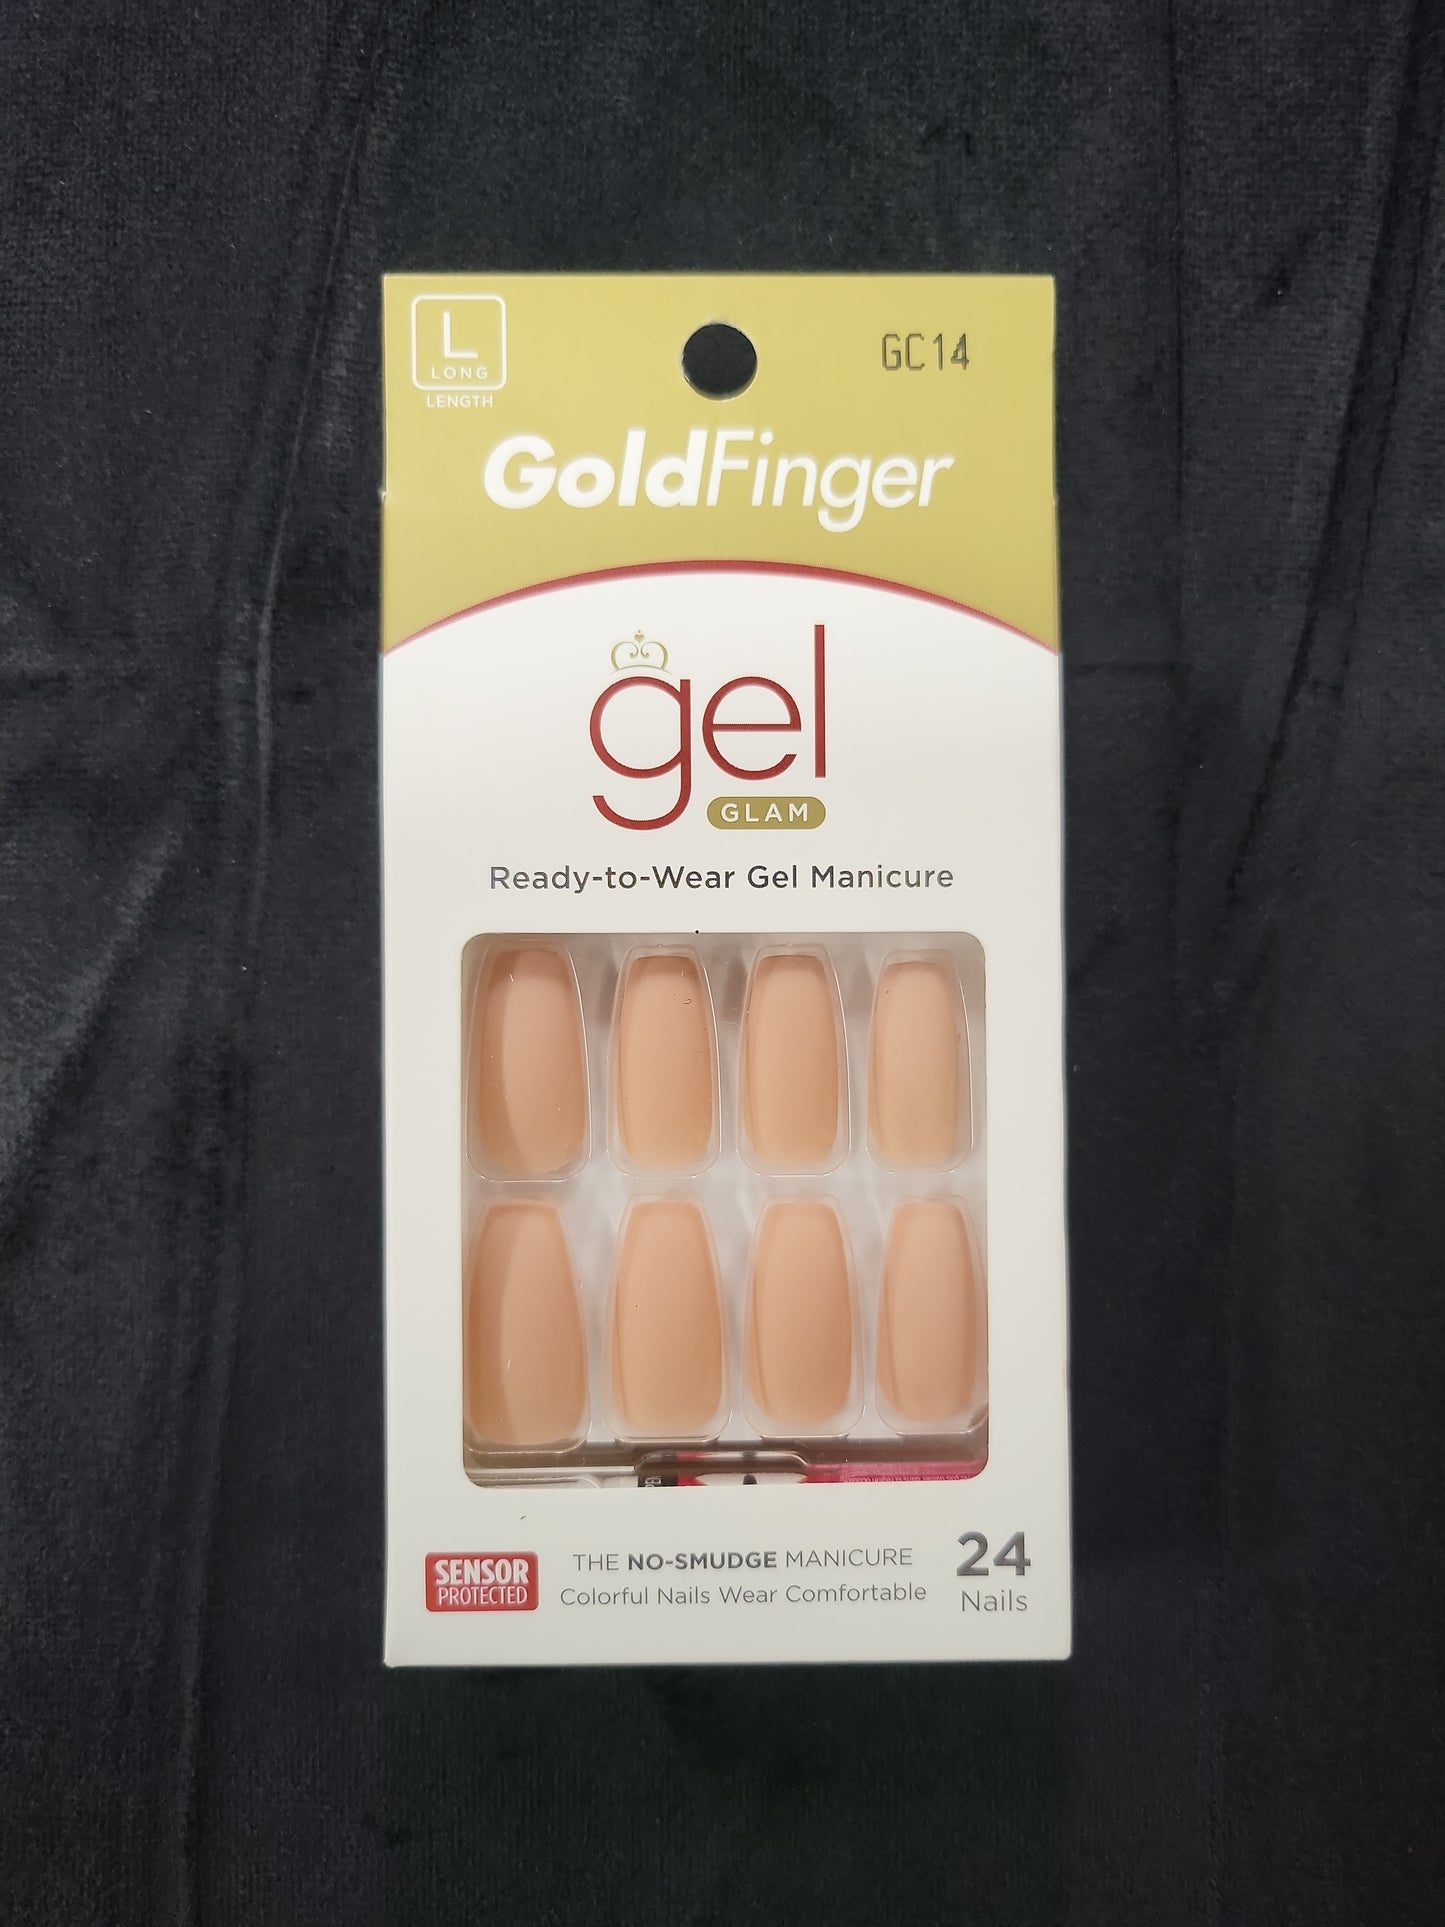 GoldFinger Gel Glam GC14